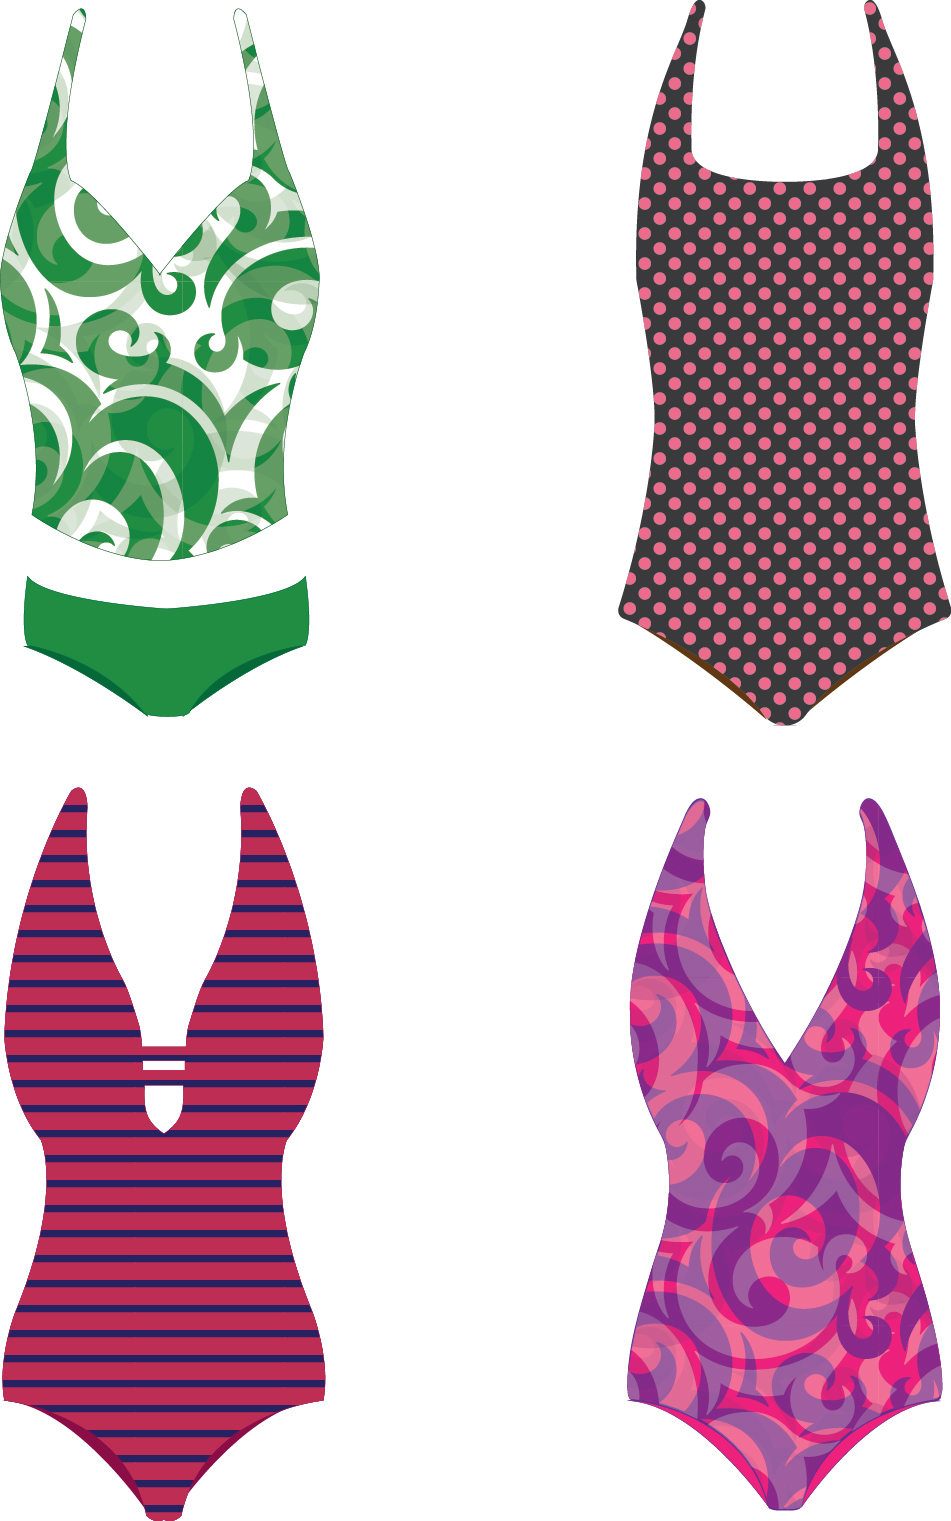 Women Swimsuits & Bikinis vector